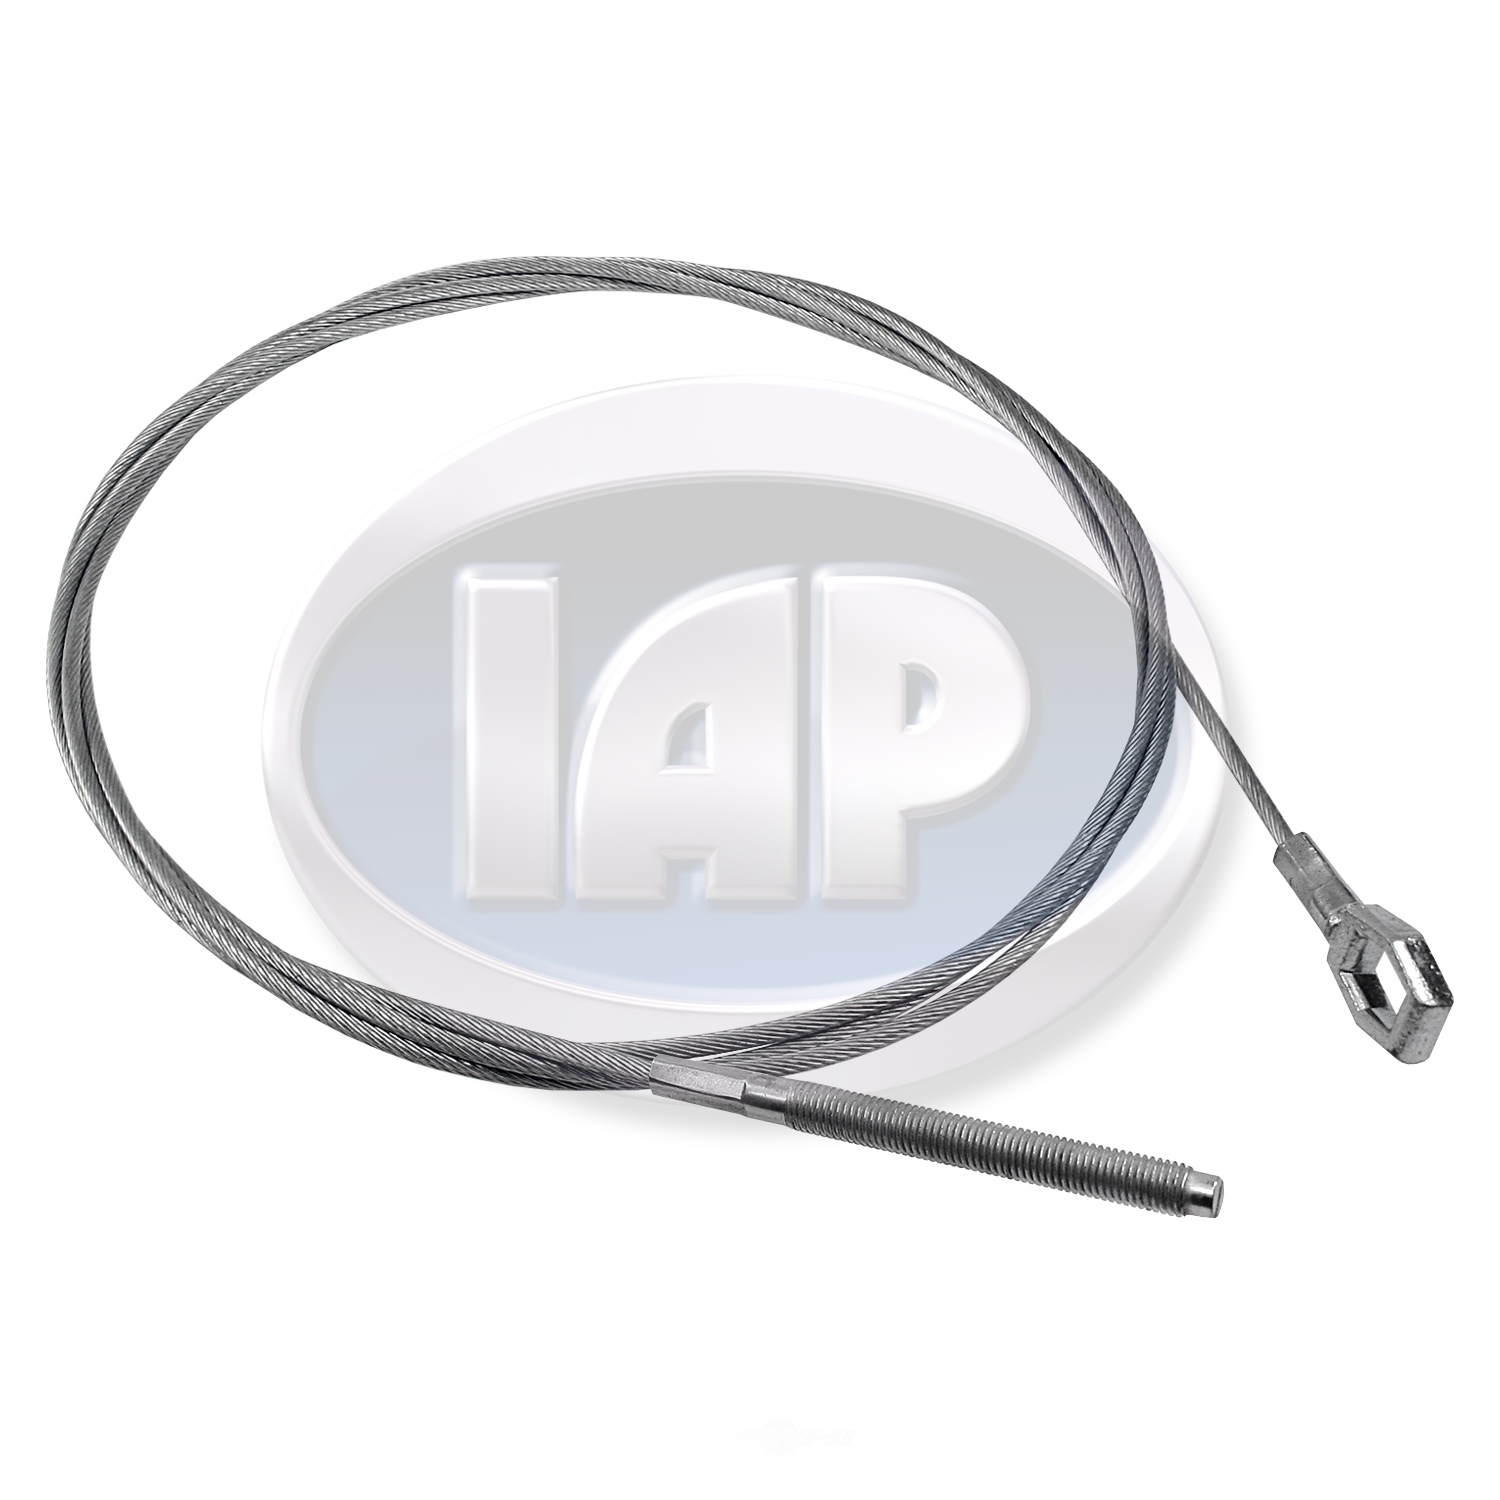 IAP/KUHLTEK MOTORWERKS - Clutch Cable - KMS 113721335A